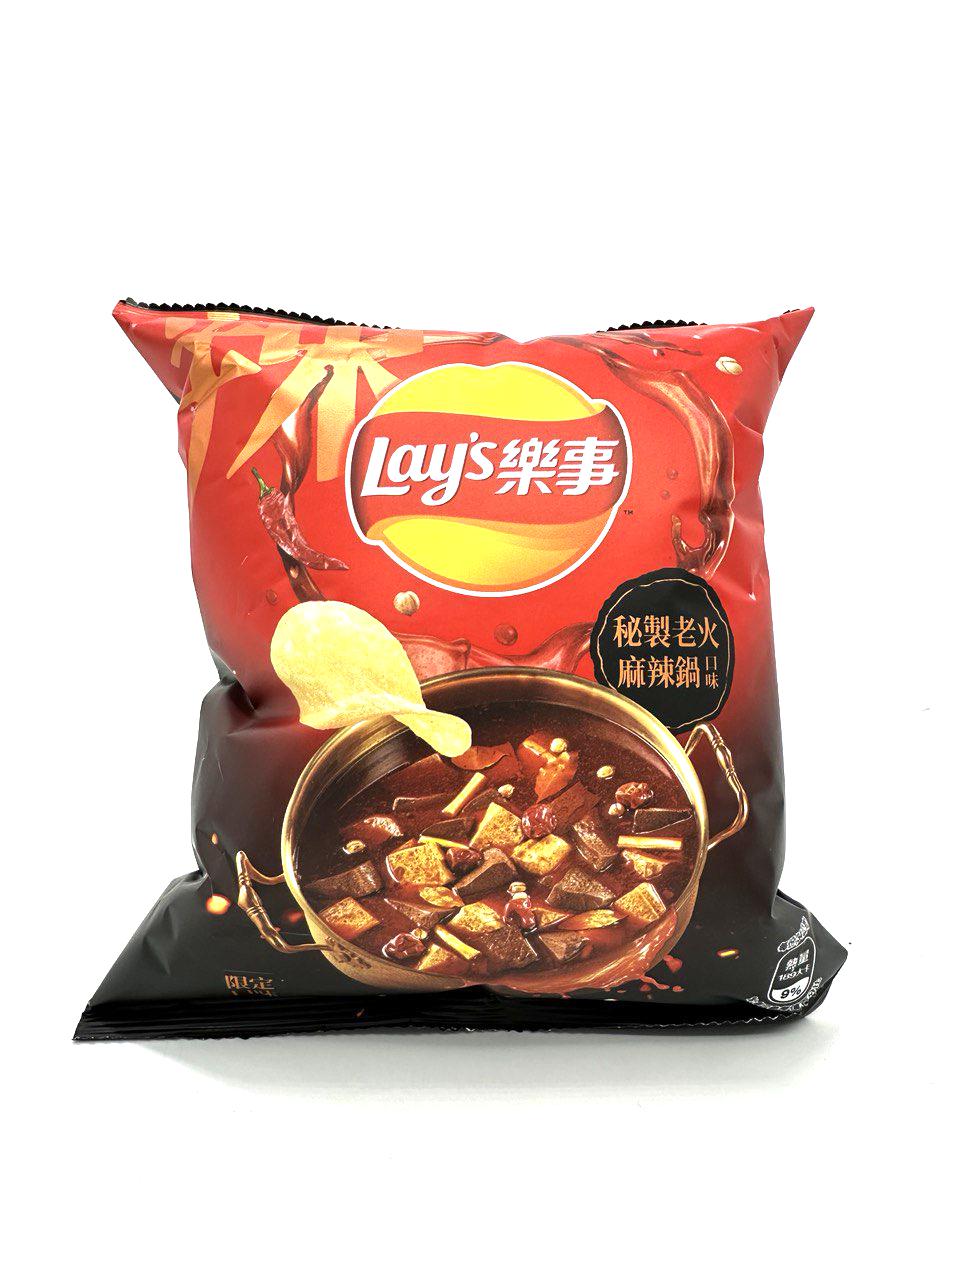 Lays Extra Spicy Hotpot (Taiwan)